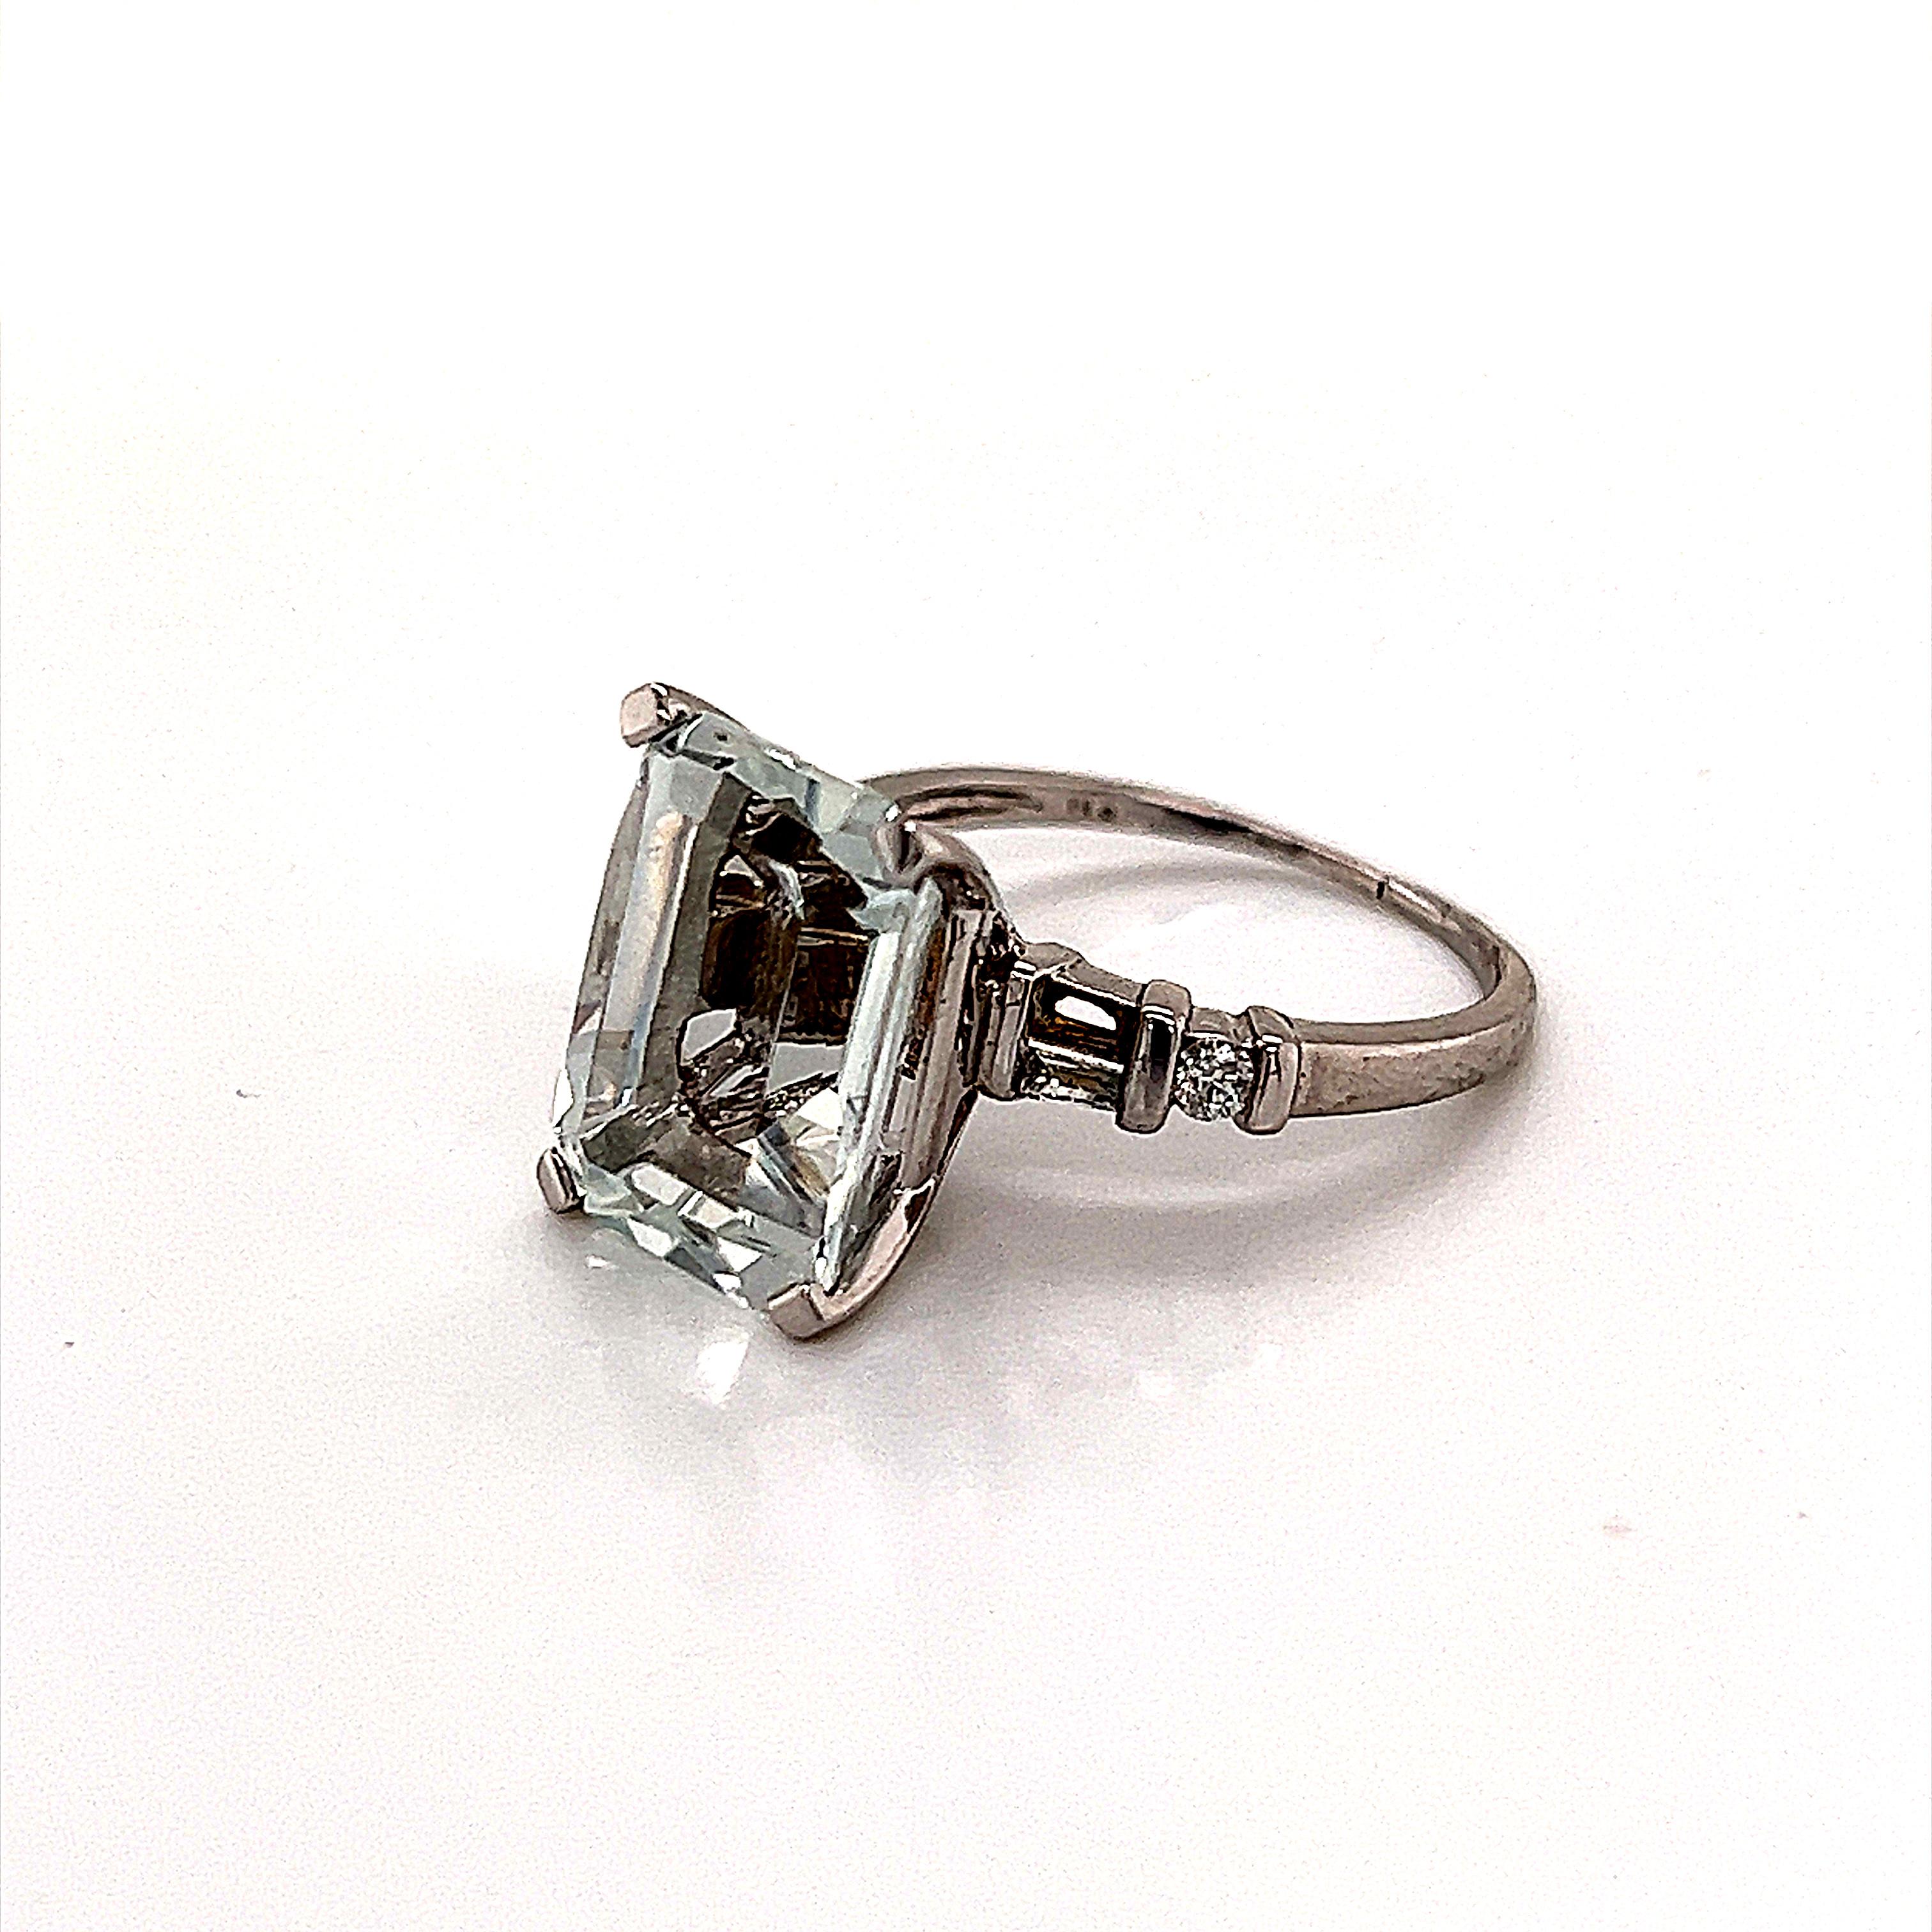 Emerald Cut Aquamarine Diamond Ring 14k Gold, 6.85 TCW Certified